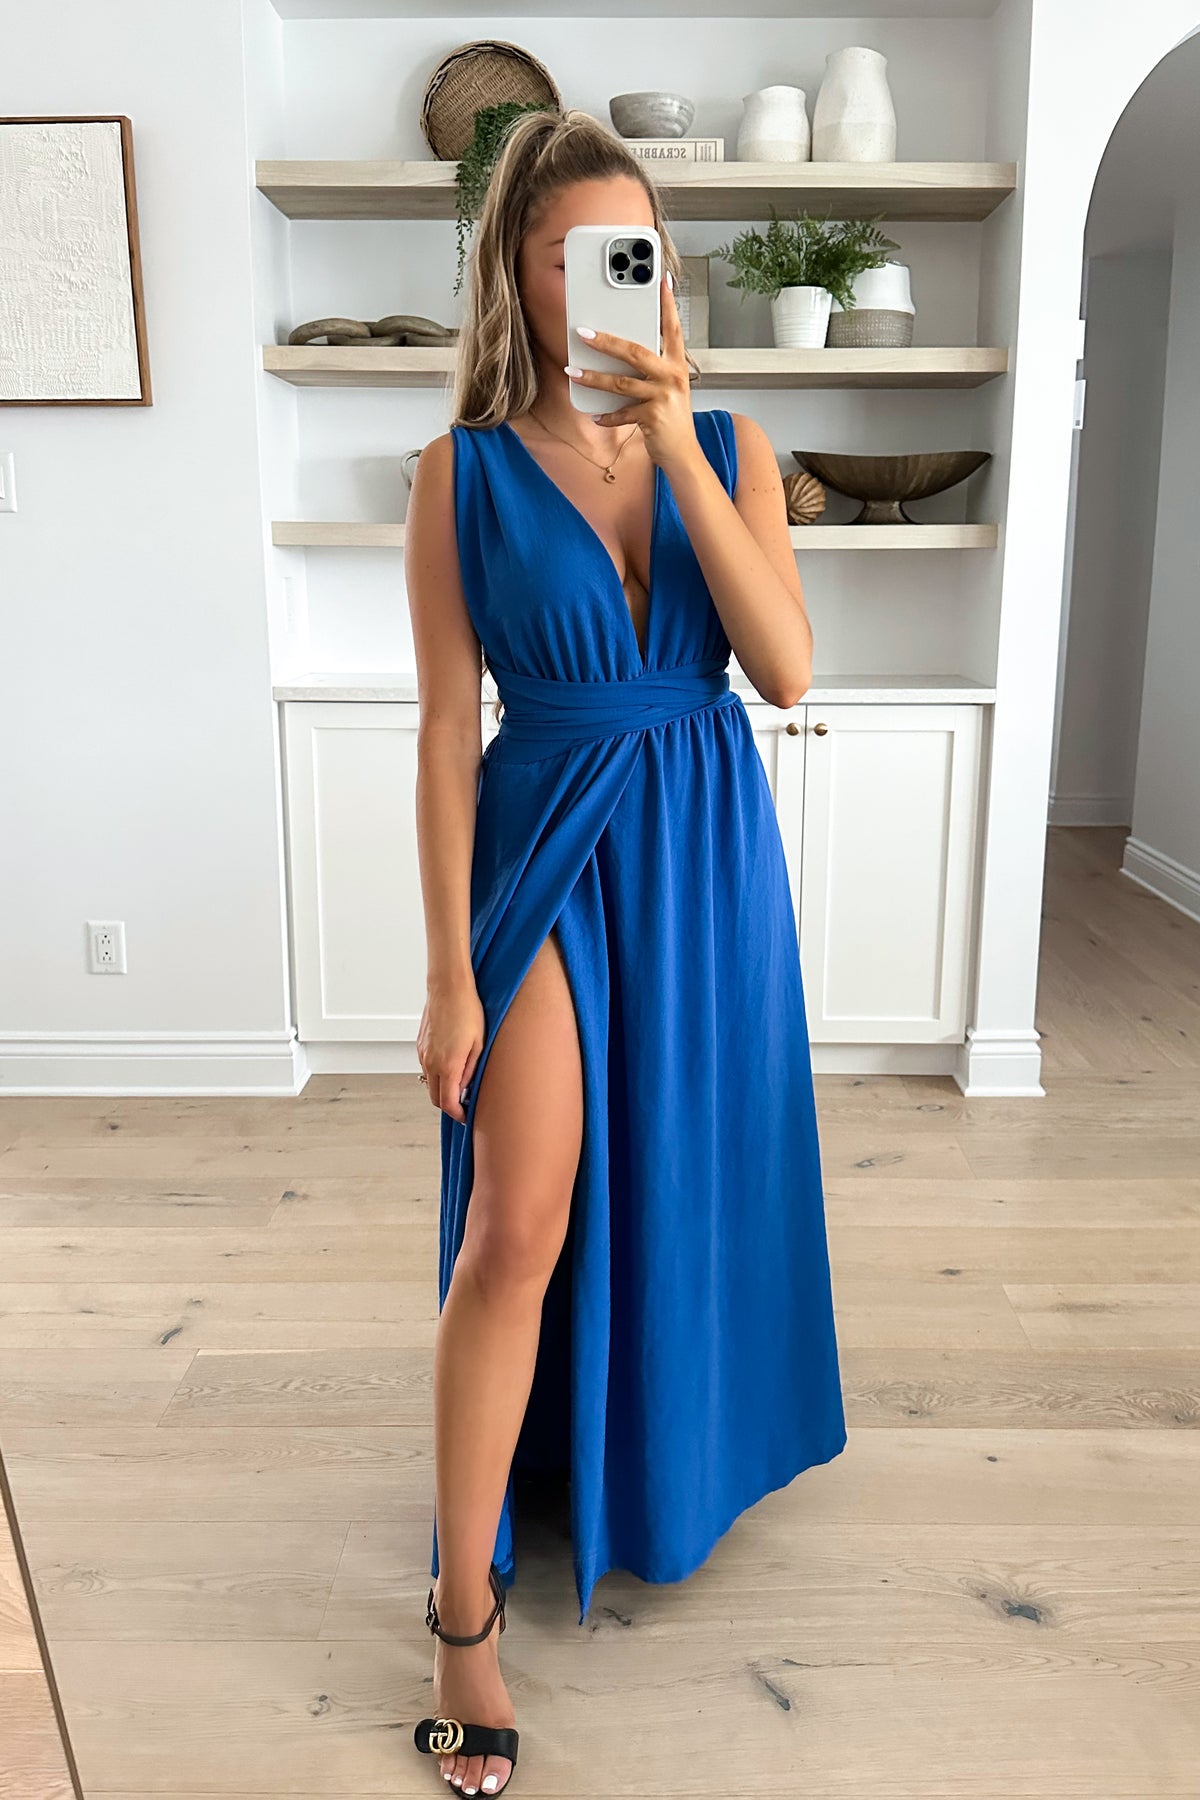 SHAYLA - Blue Dress